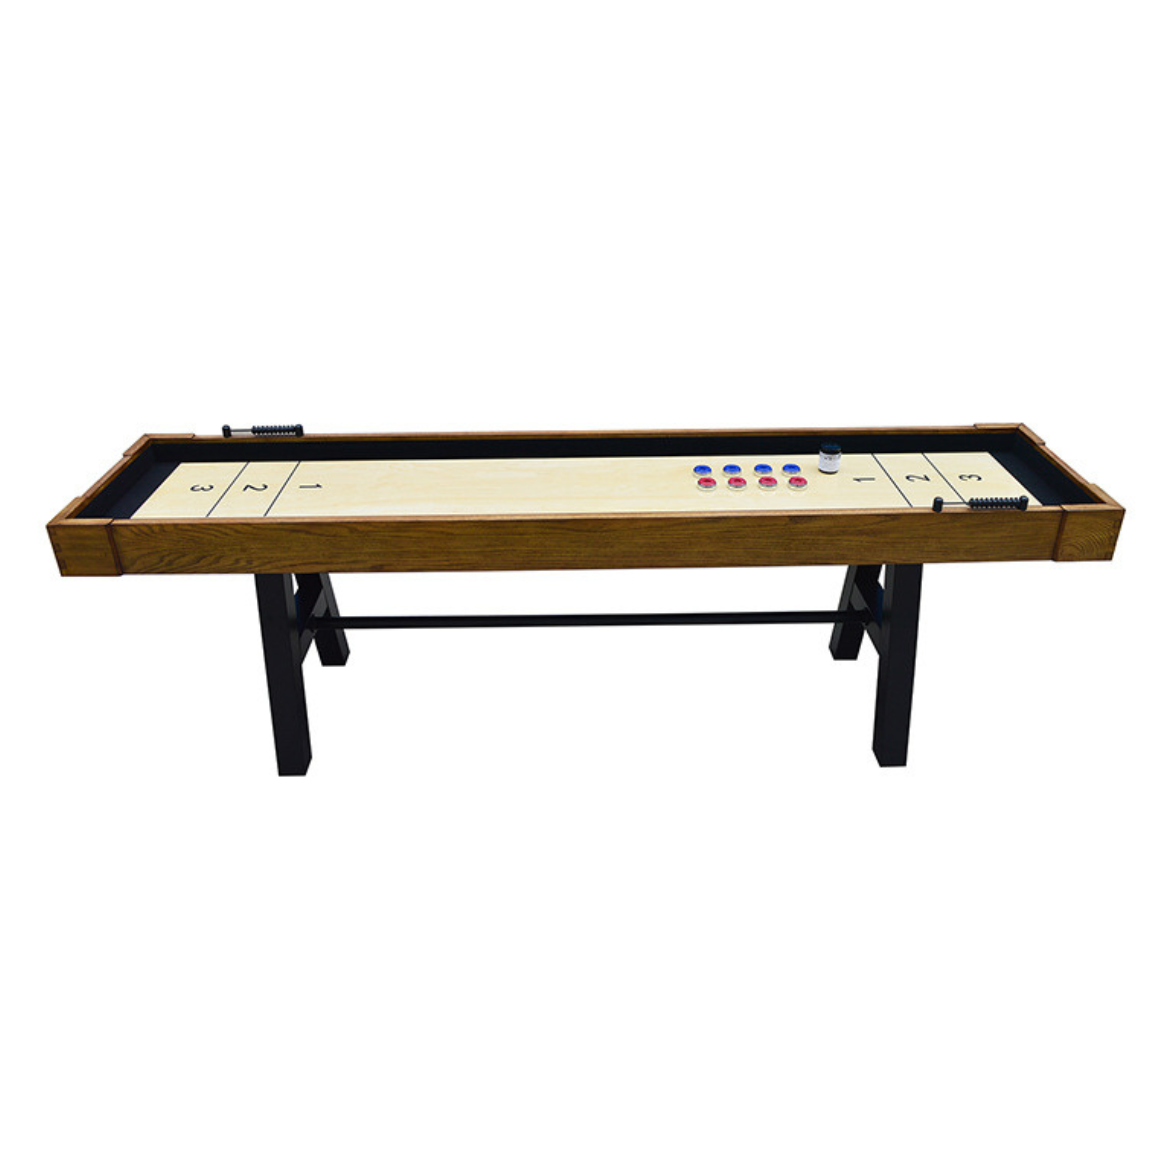 Tableblade™ ZEBRA (9-Foot) Shuffleboard Table – tableblade